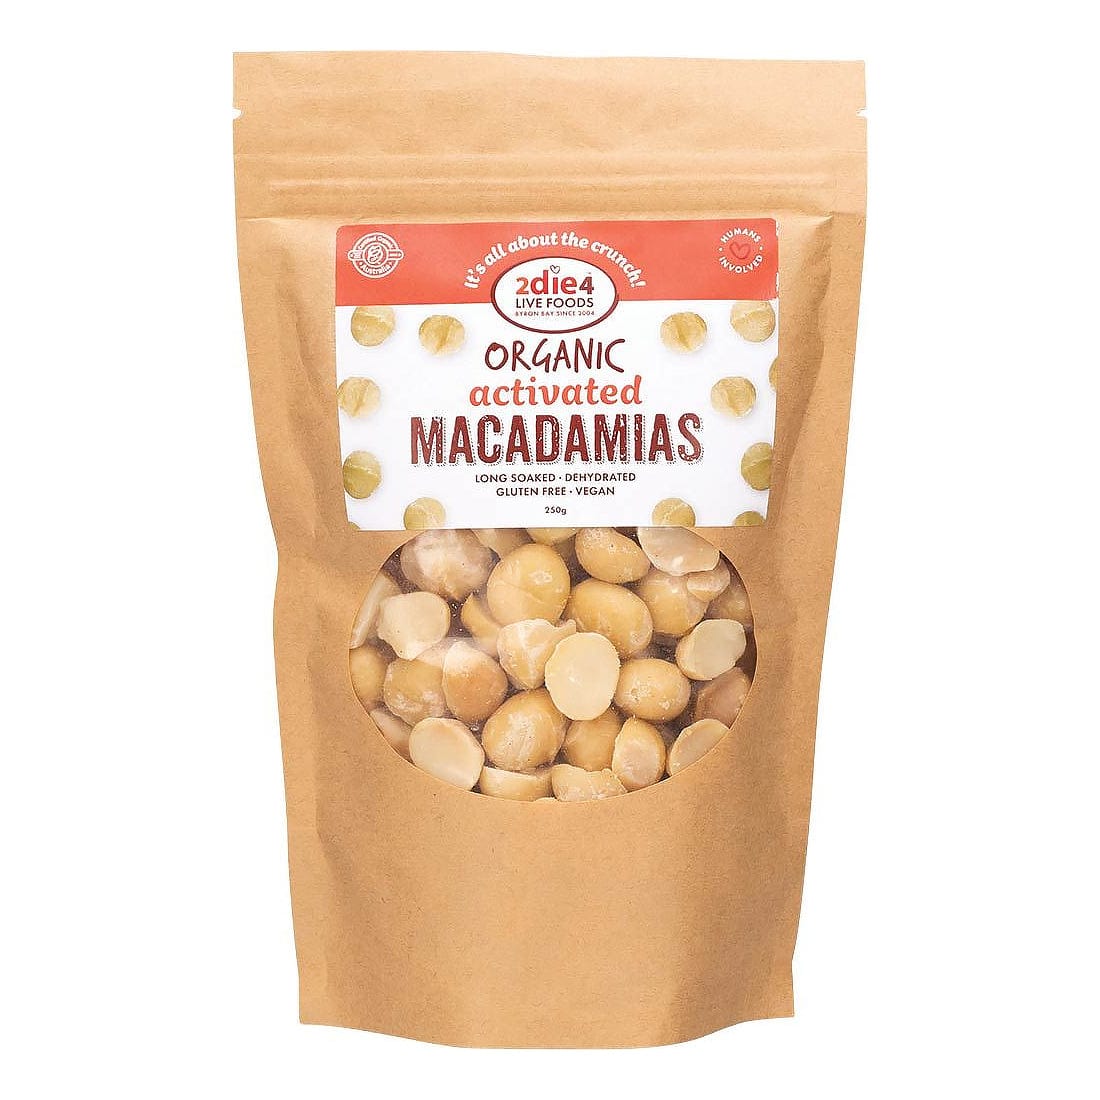 2Die4 Live Foods Organic Activated Macadamias 250g